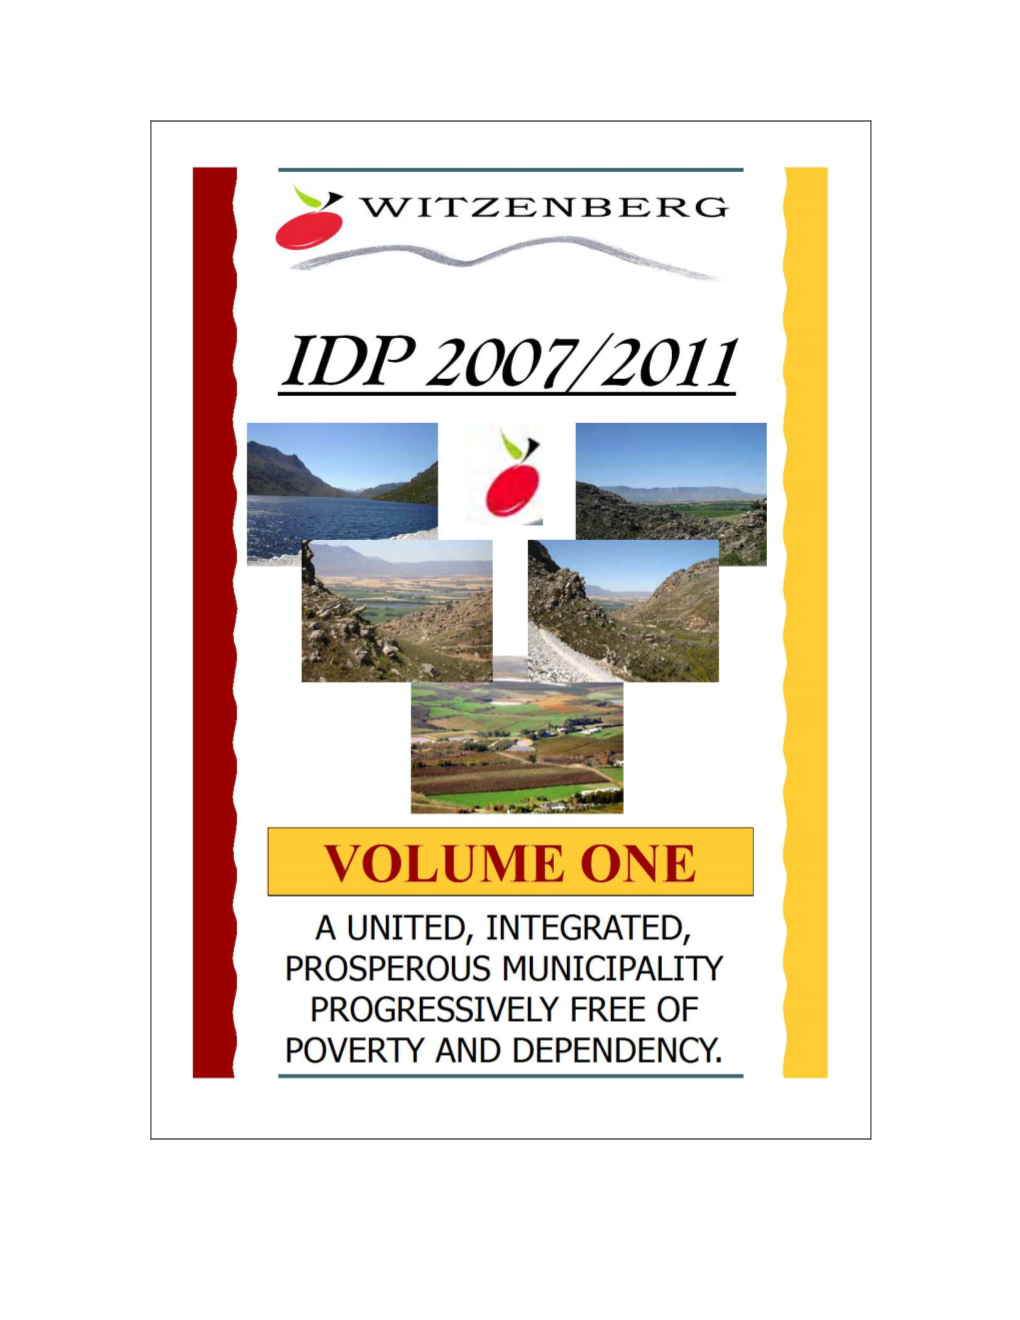 IDP CW Witzenber 2007 Volume 1 Main